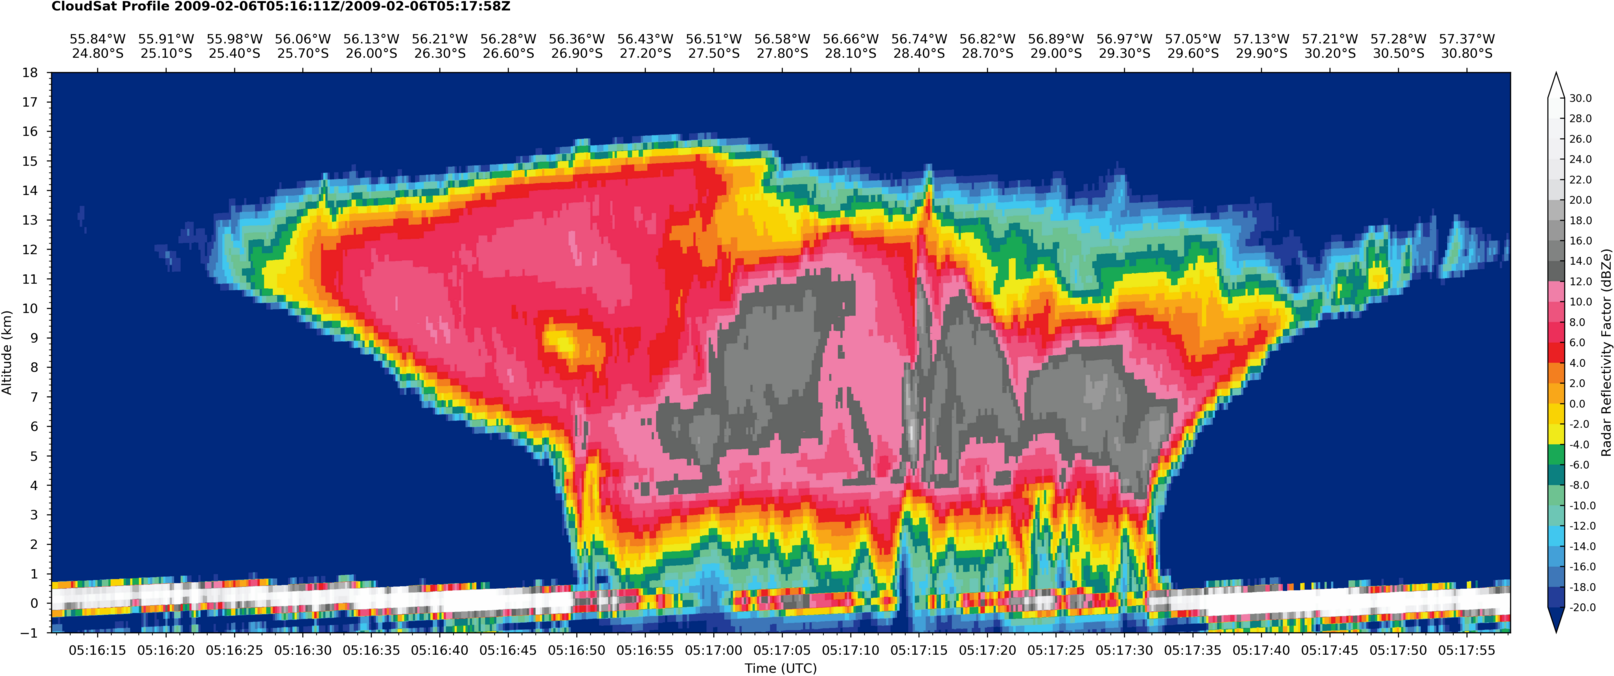 A plot of CloudSat radar reflectivity